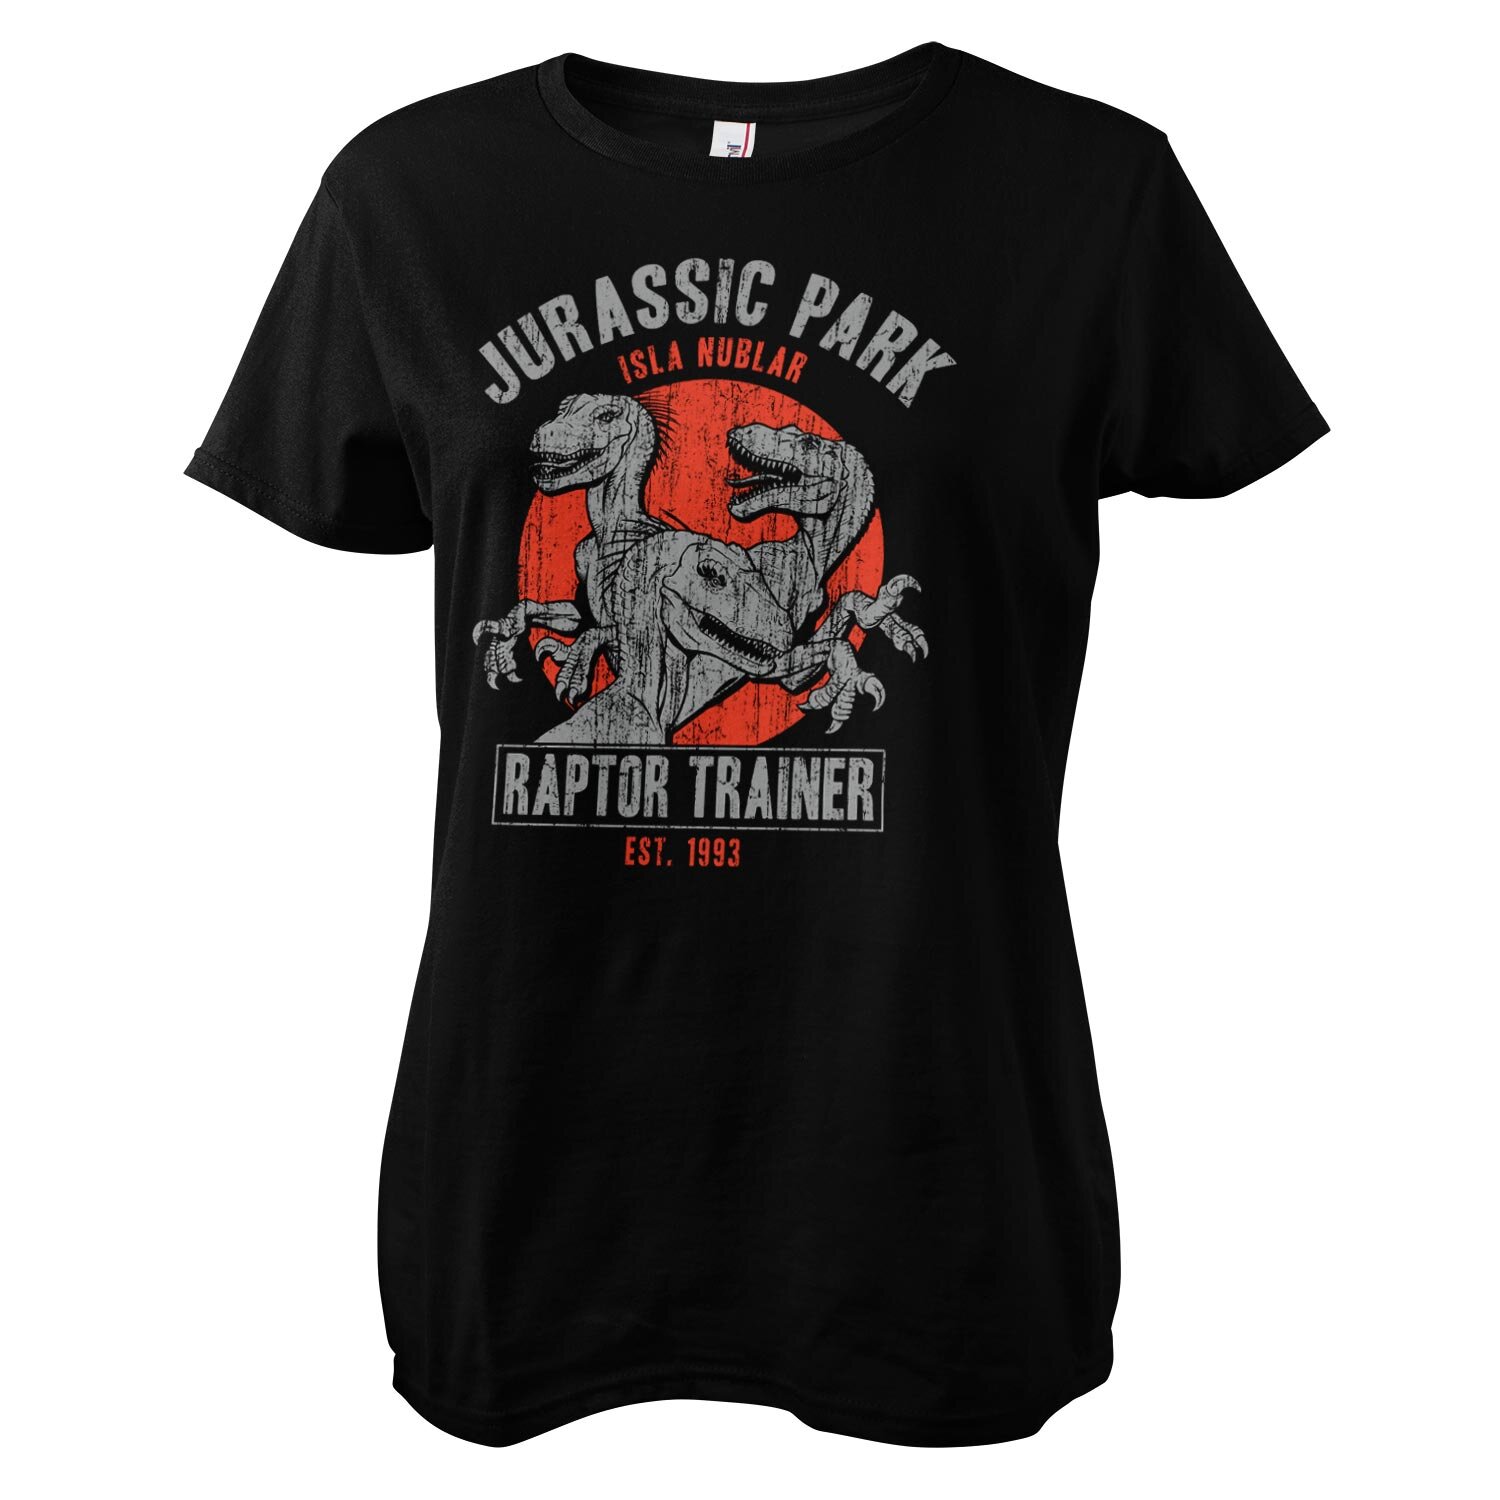 Jurassic Park - Raptor Trainer Girly Tee